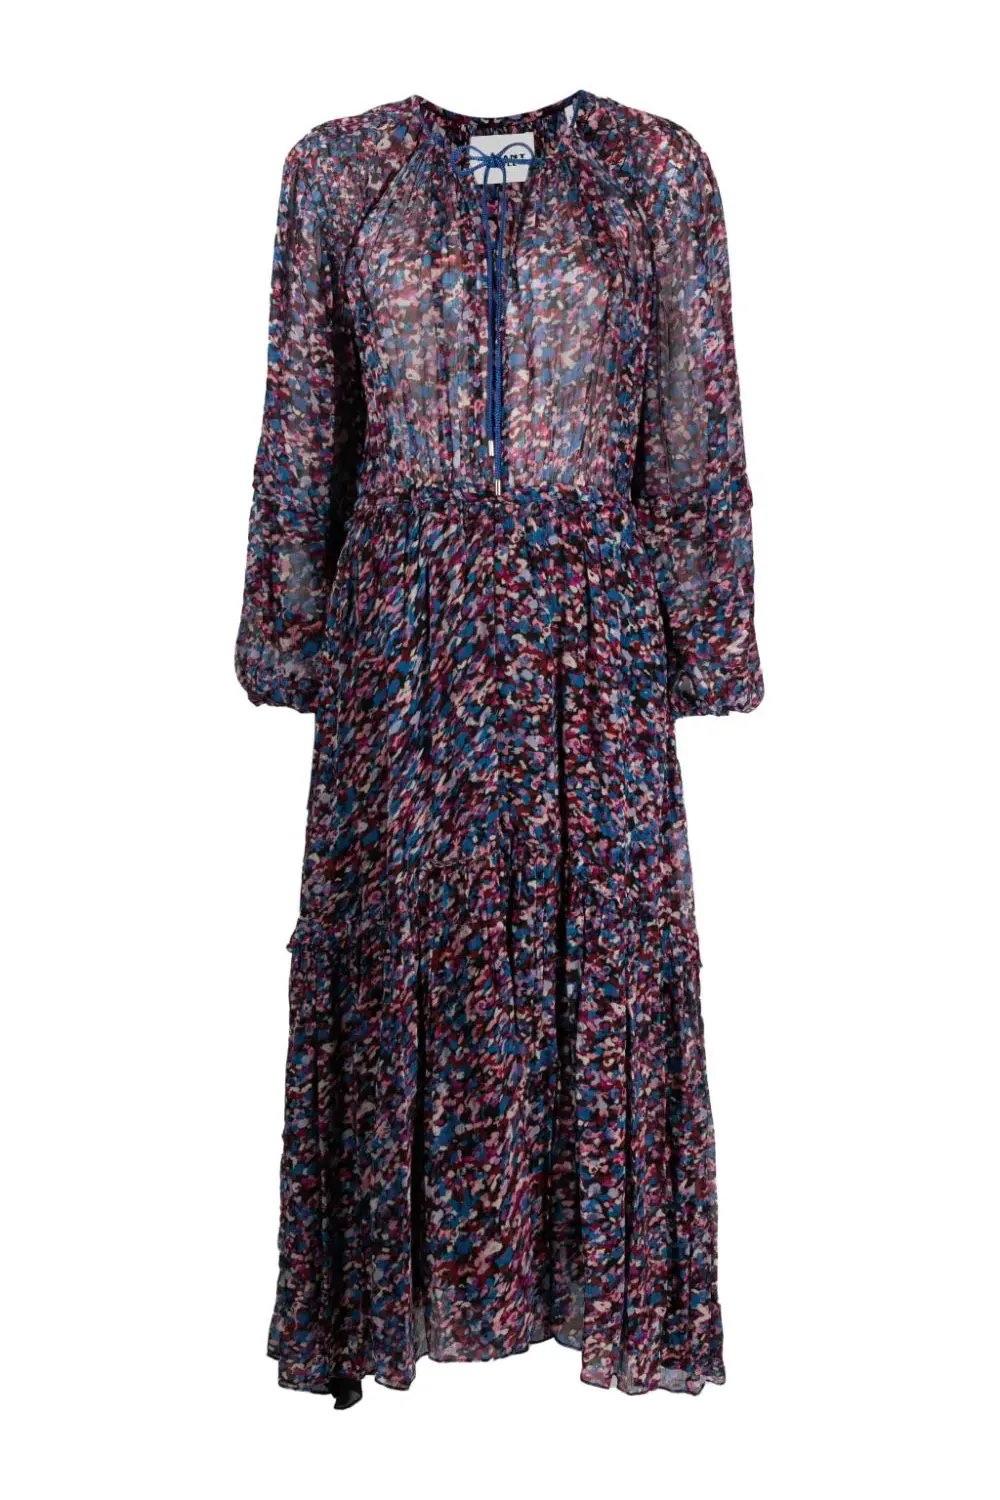 Fratela long-sleeved chiffon print dress, 3 colors